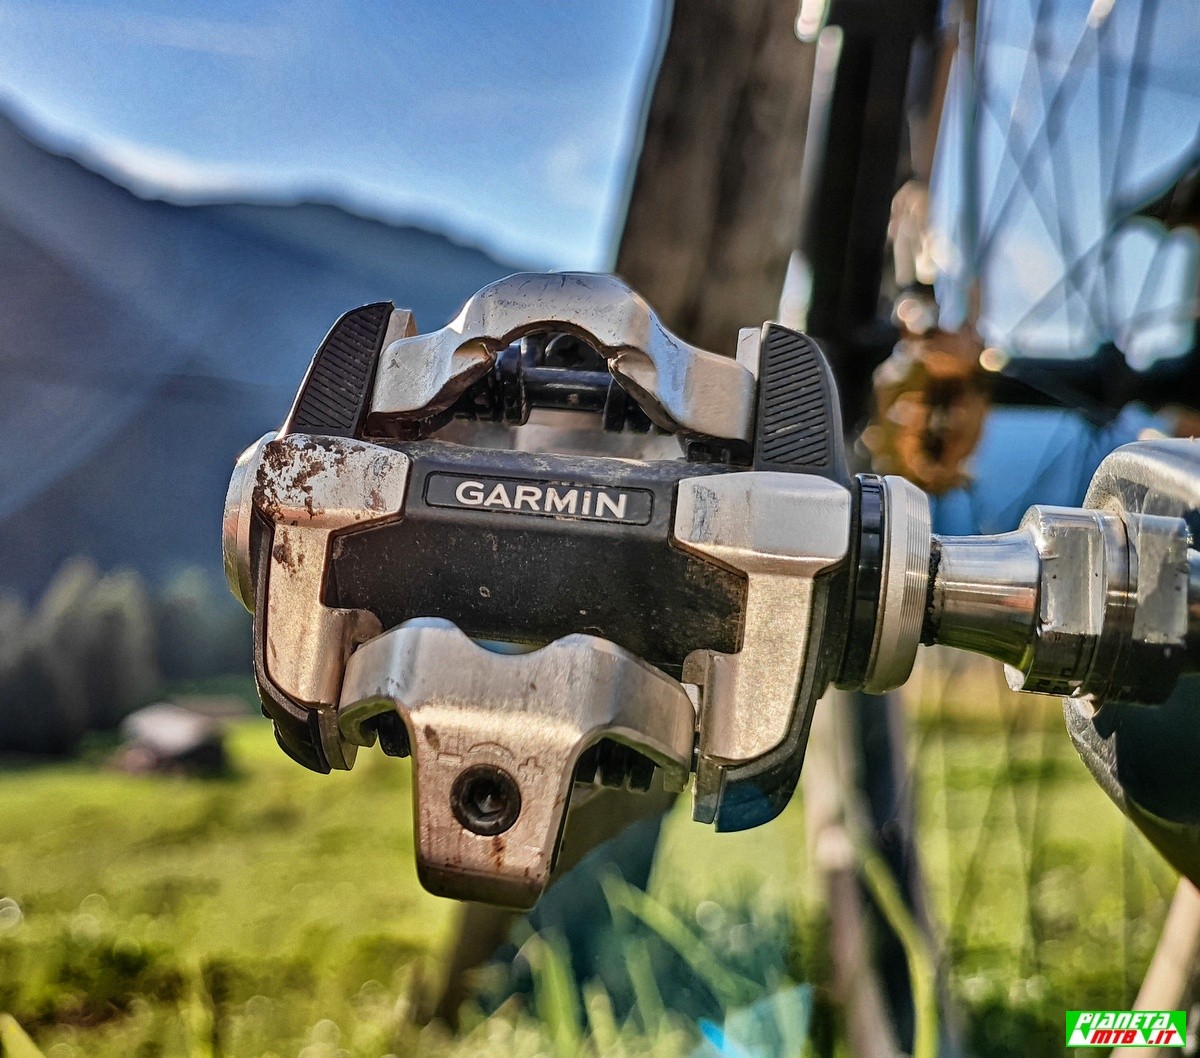 Garmin Rally XC 200 - pedali power meter montati sulla bici